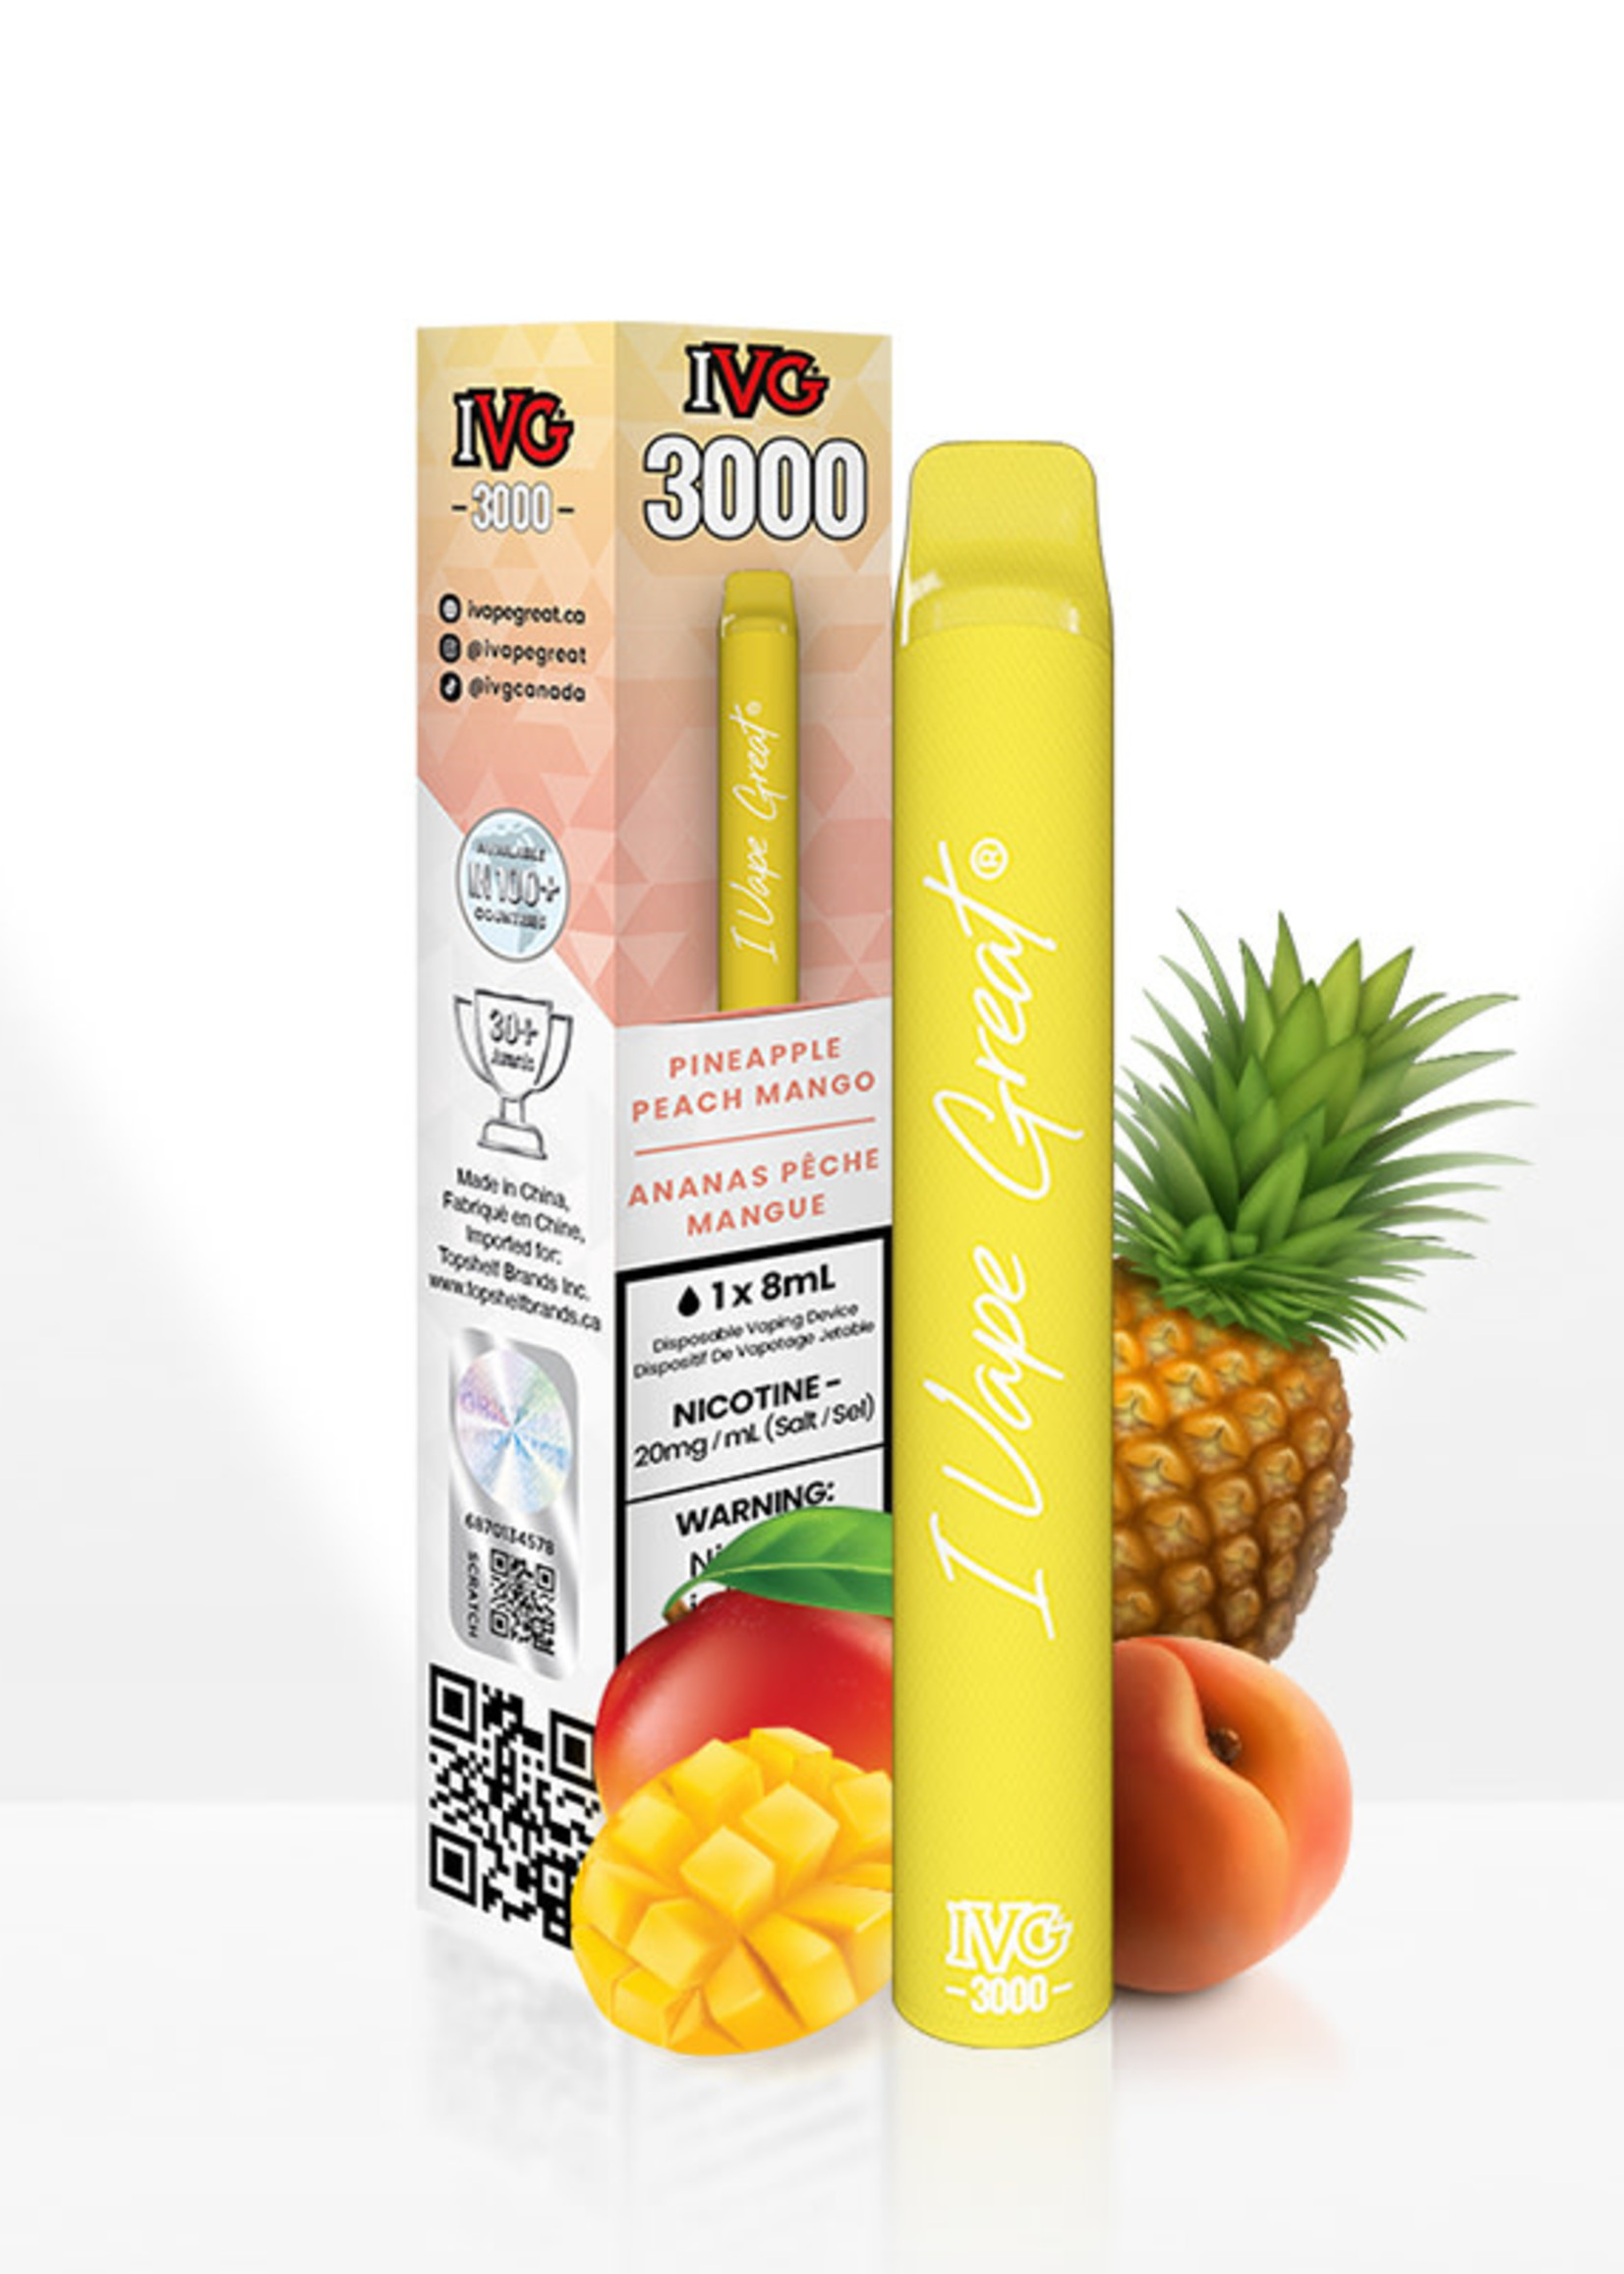 IVG Pineapple Peach Mango - IVG 3000